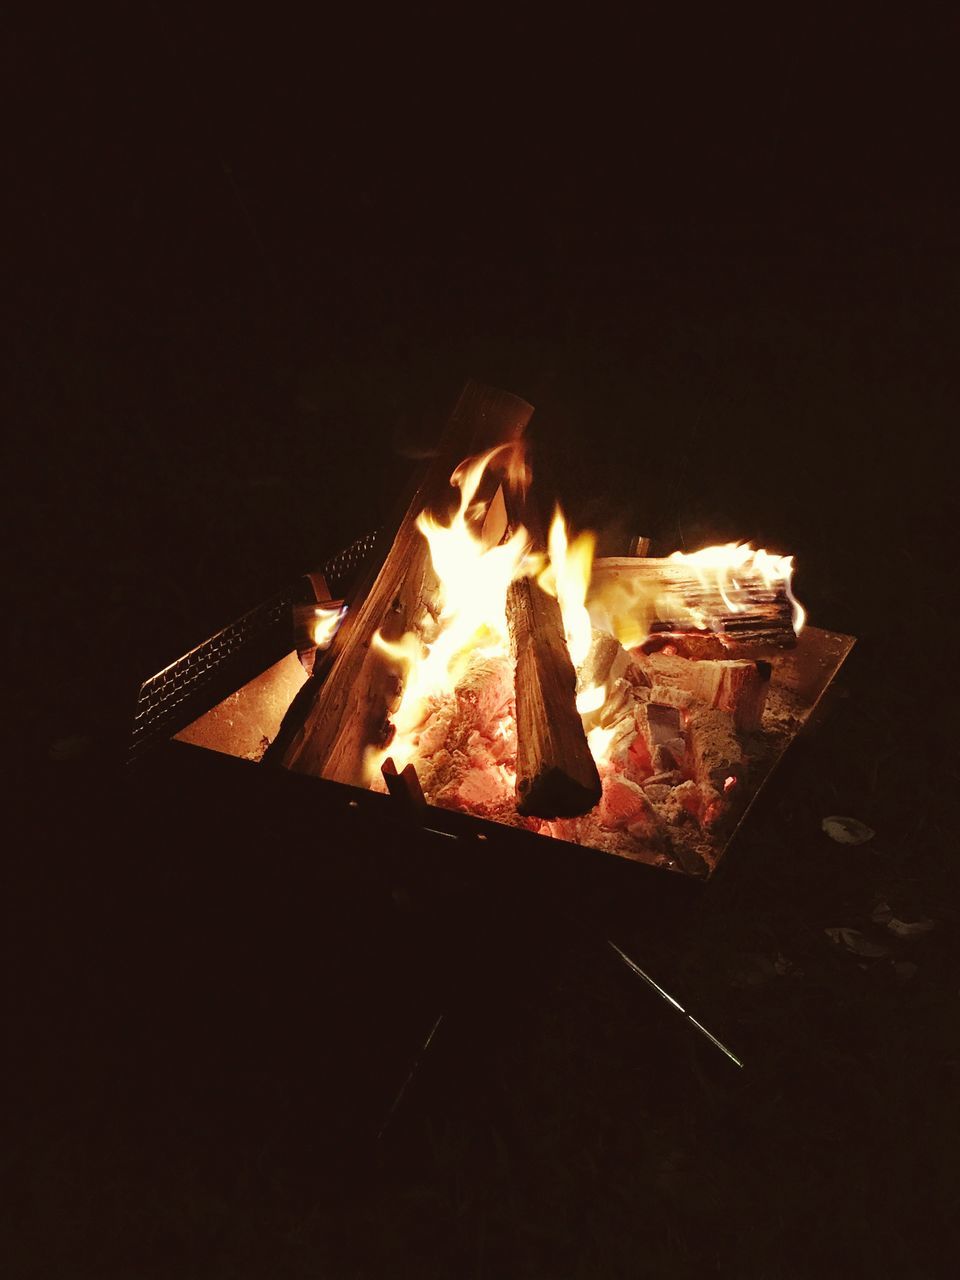 flame, burning, heat - temperature, night, wood - material, no people, bonfire, outdoors, close-up